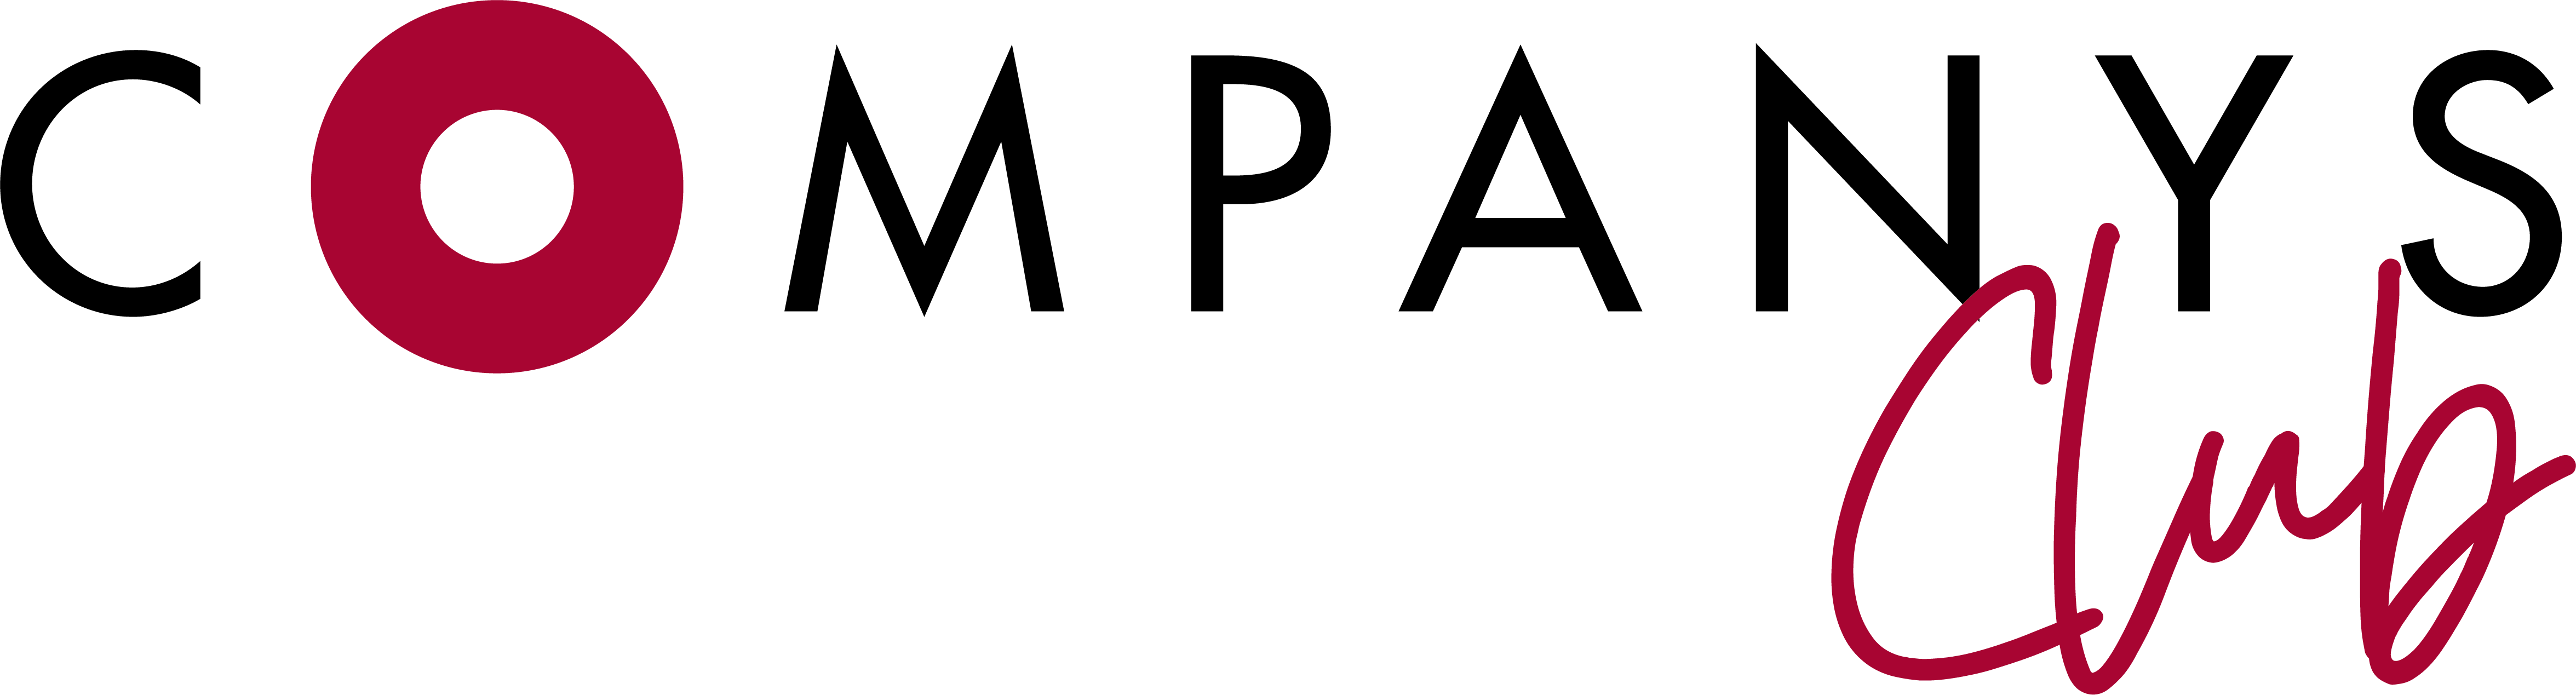 Companys club logo